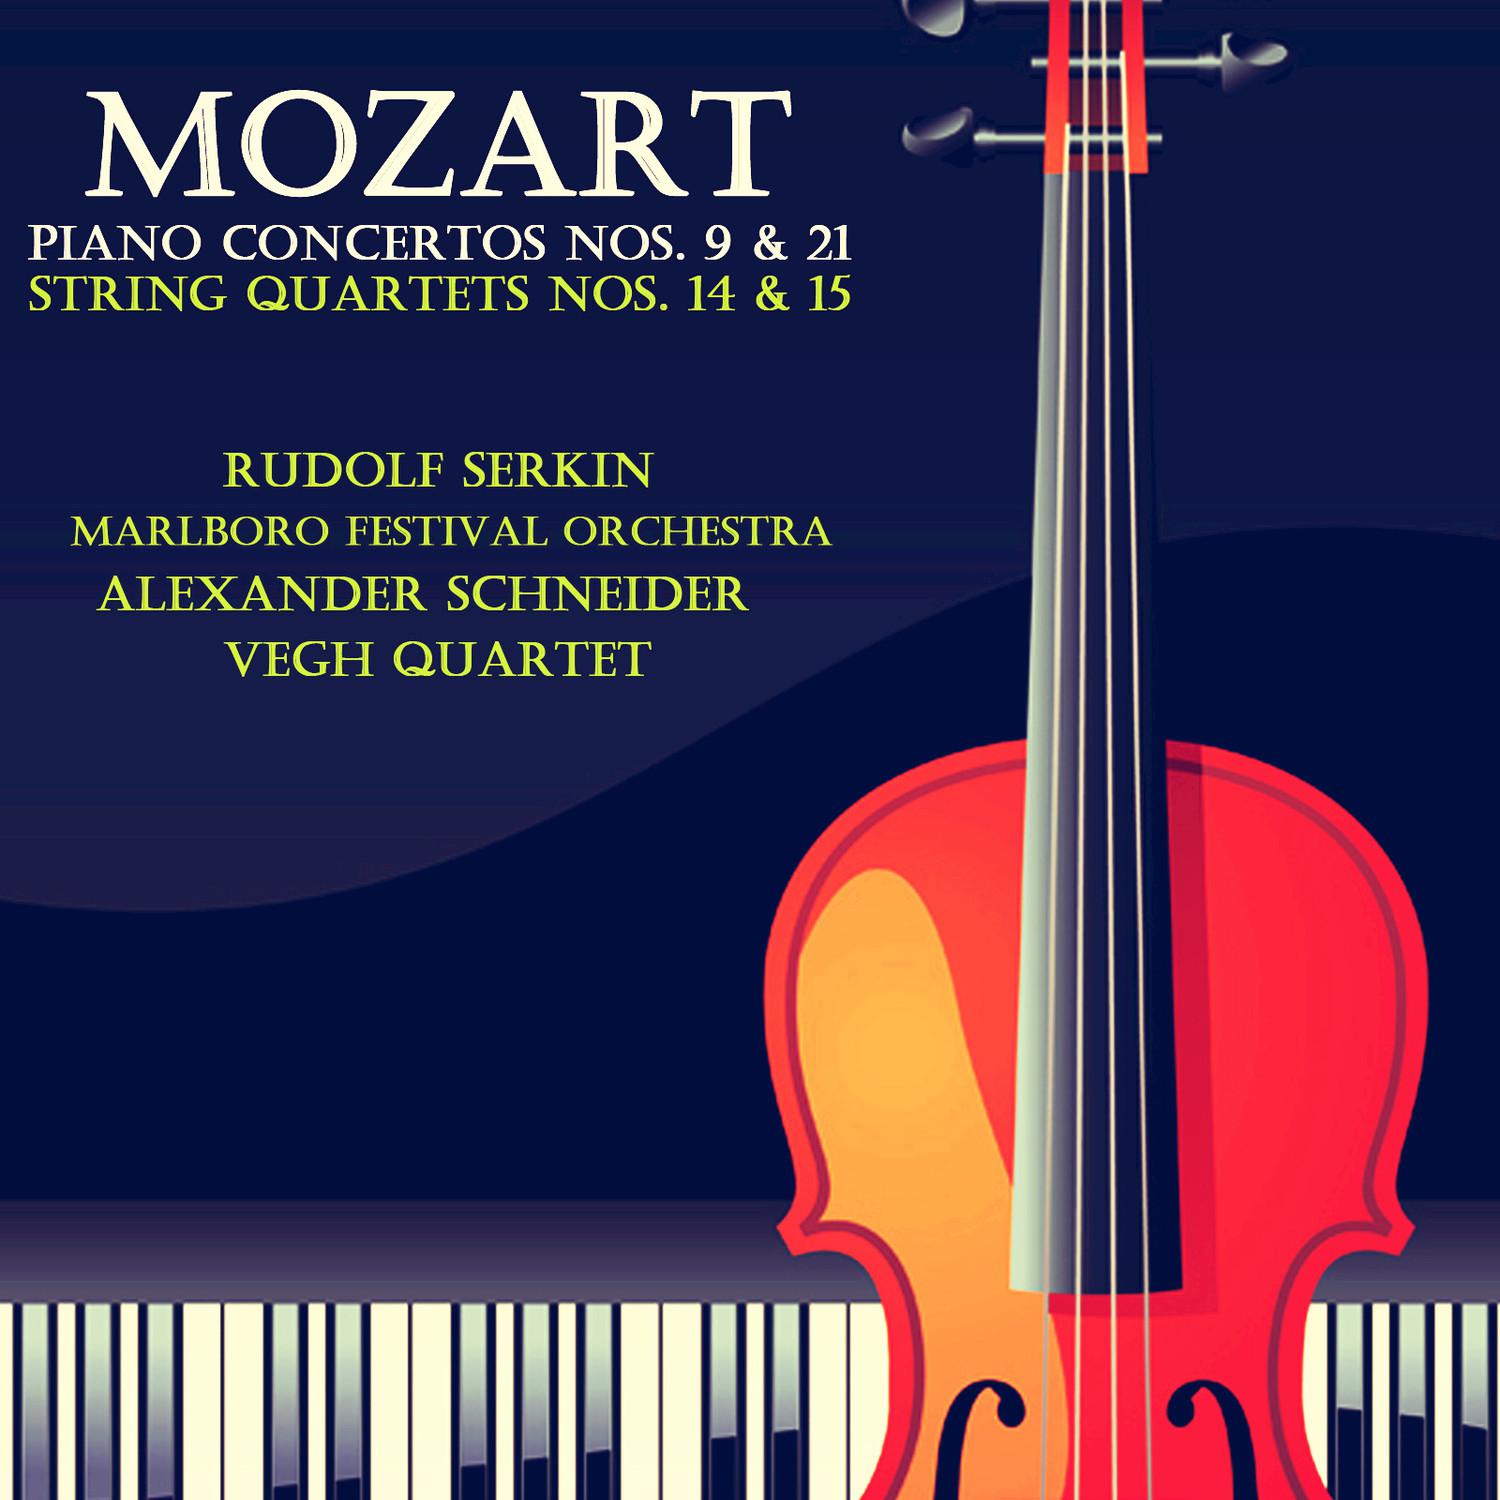 String Quartet No. 14 in G Major, K. 387, "Spring": IV. Molto allegro